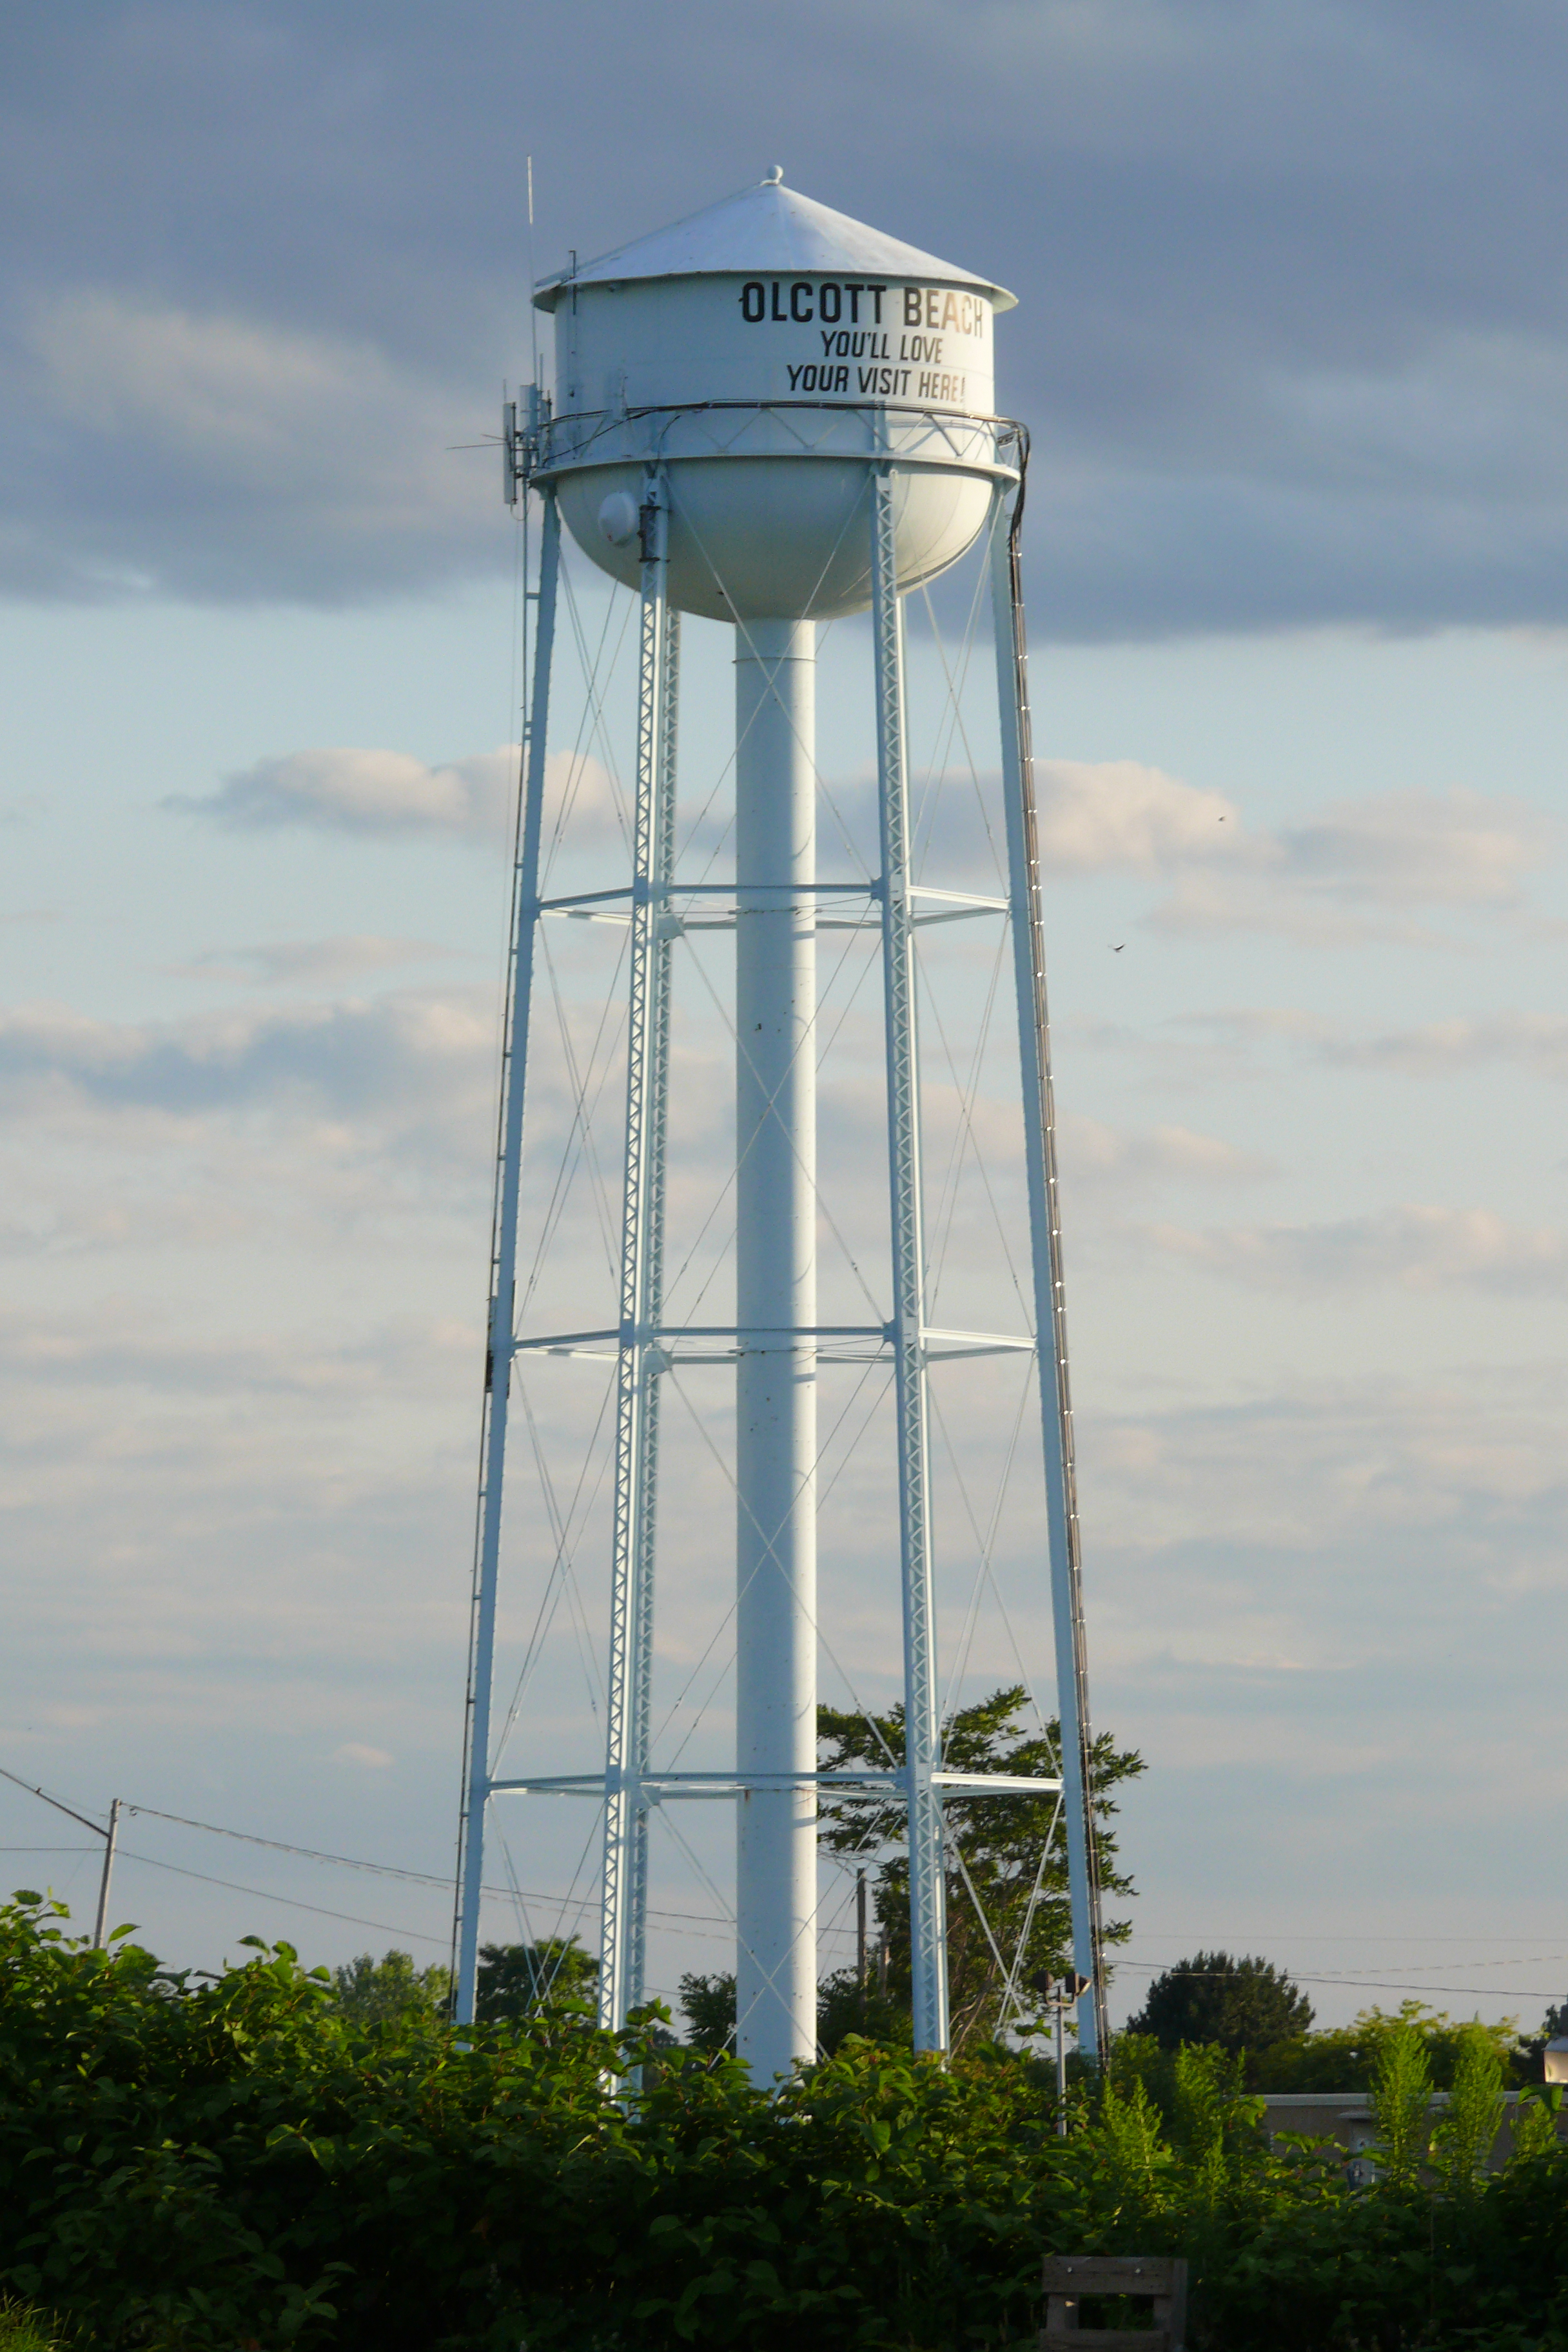 File:Olcott water tower.jpg - Wikimedia Commons